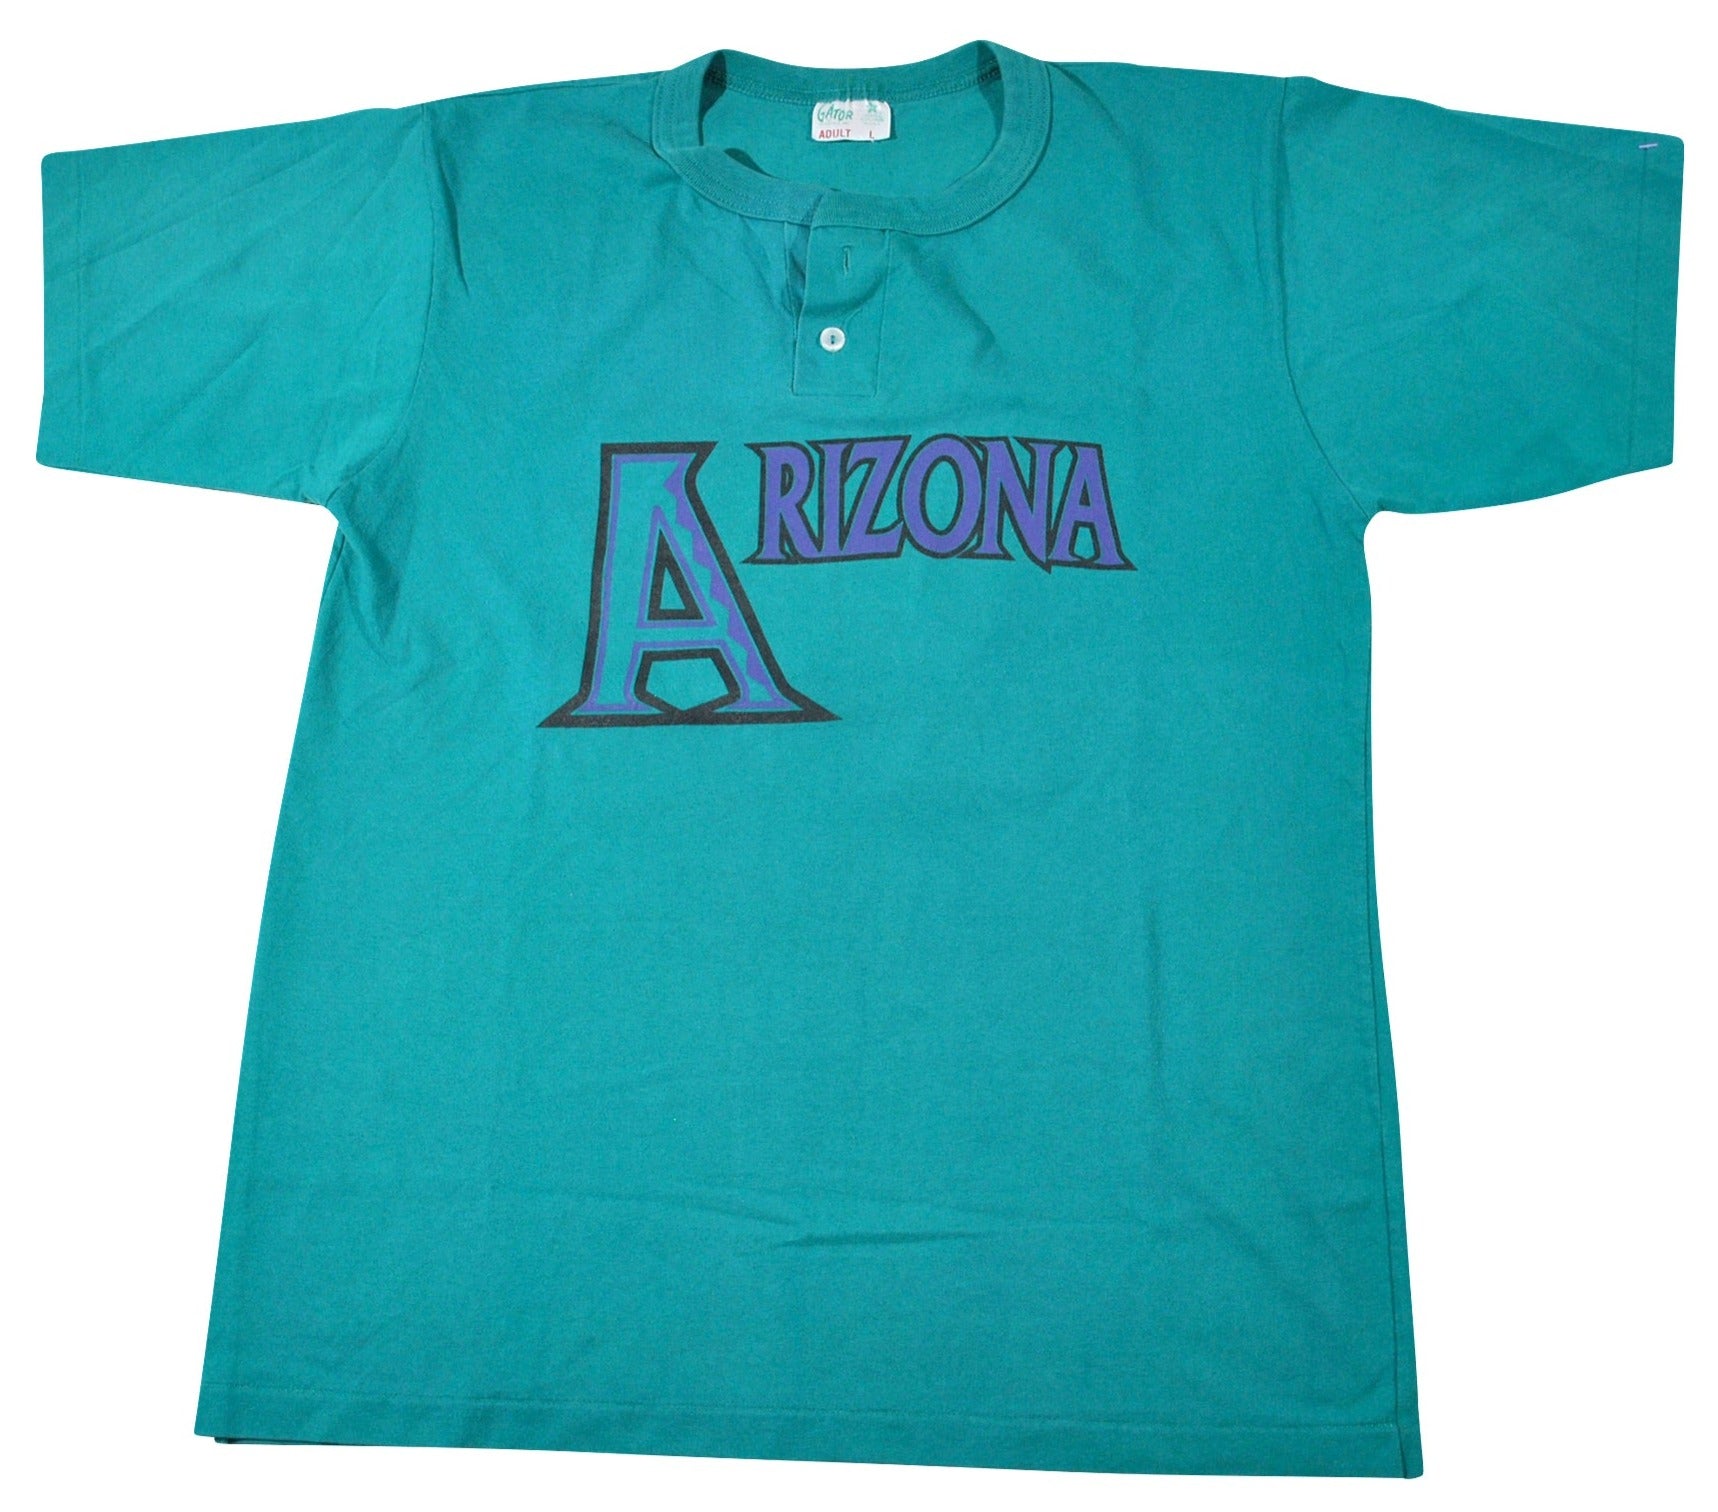 LOGO 7, Shirts, Vintage 998 Arizona Diamondbacks Logo 7 Purple Shirt Size  Lxl See Details